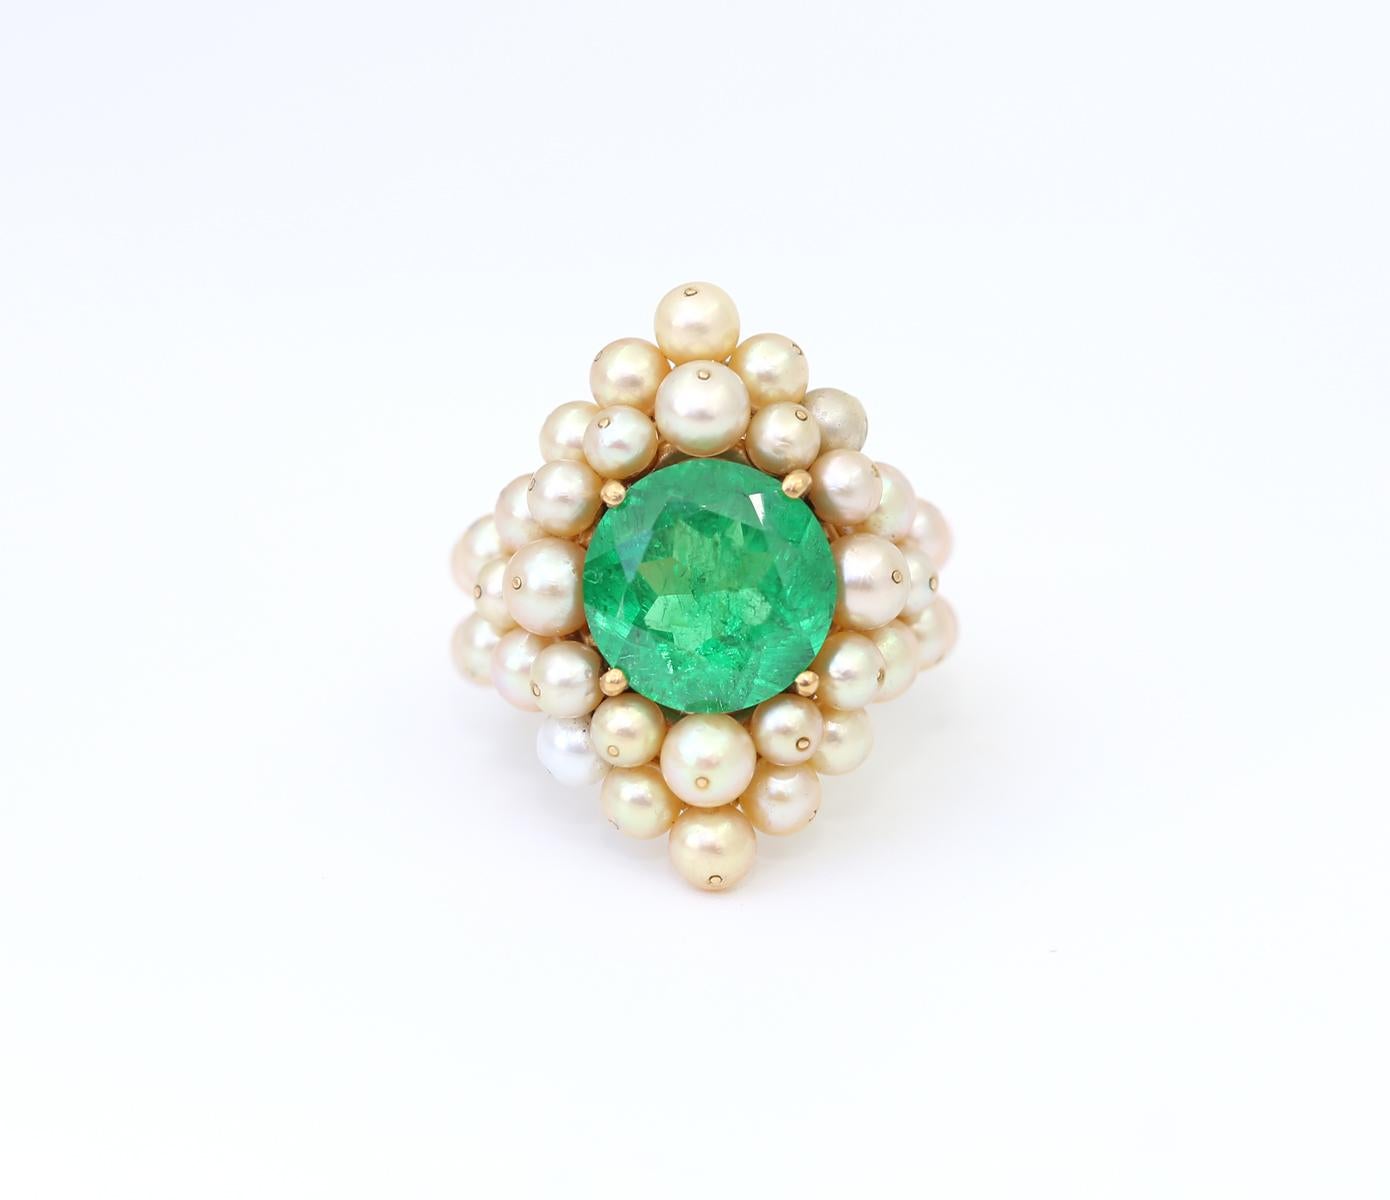 Emerald Cut 7.7 Ct Demantoid Garnet Pearls Diamonds Antonio Seijo 18K Ring Certified, 2010 For Sale